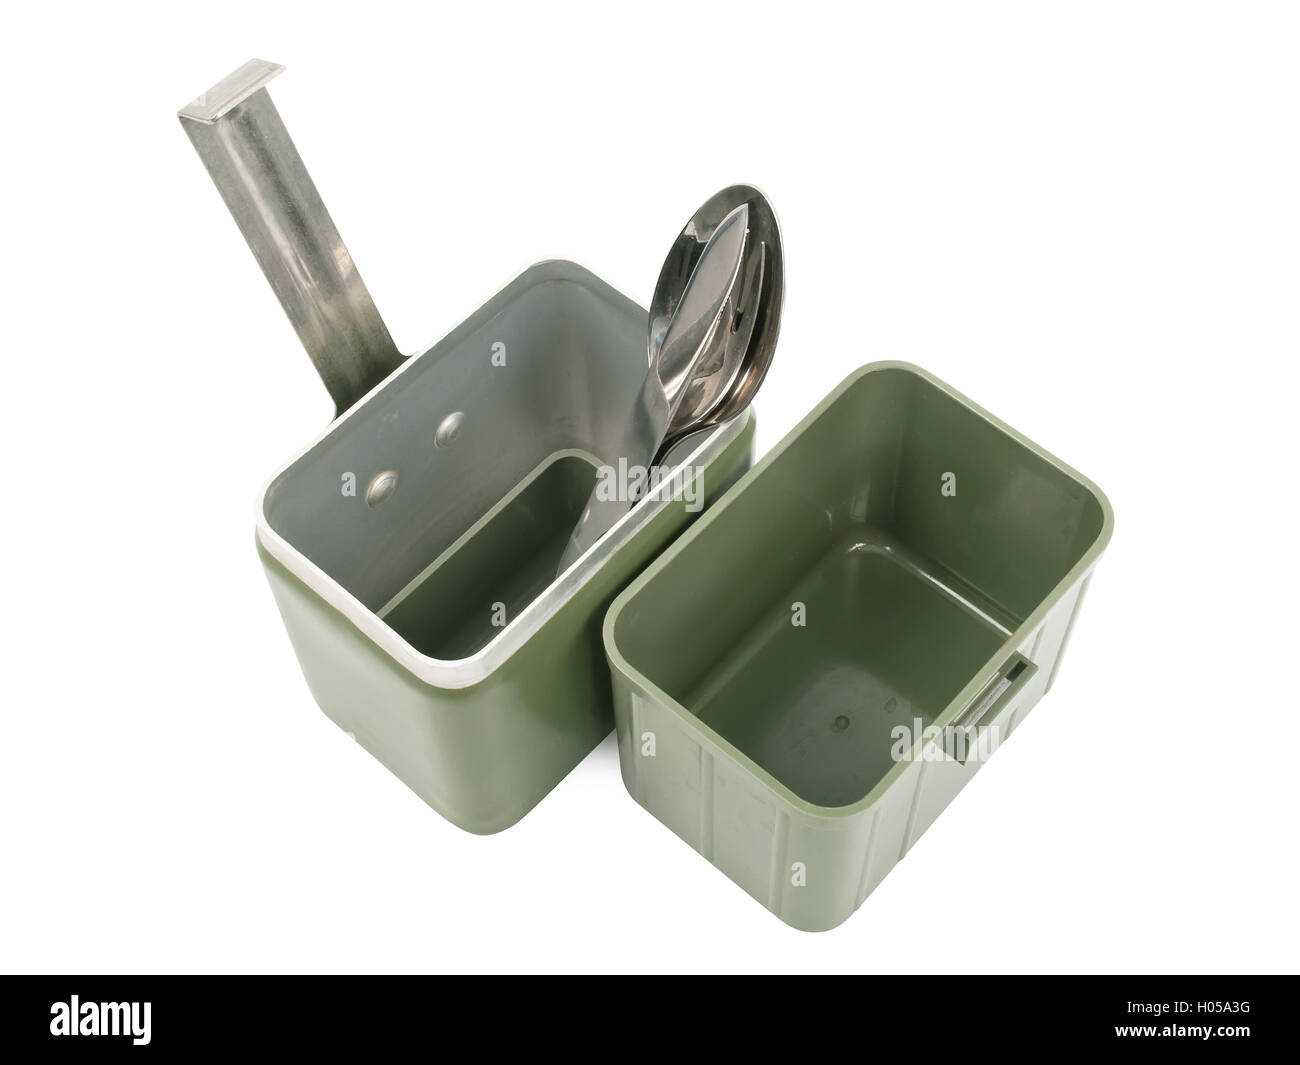 Military lunch box Stock Photo - Alamy